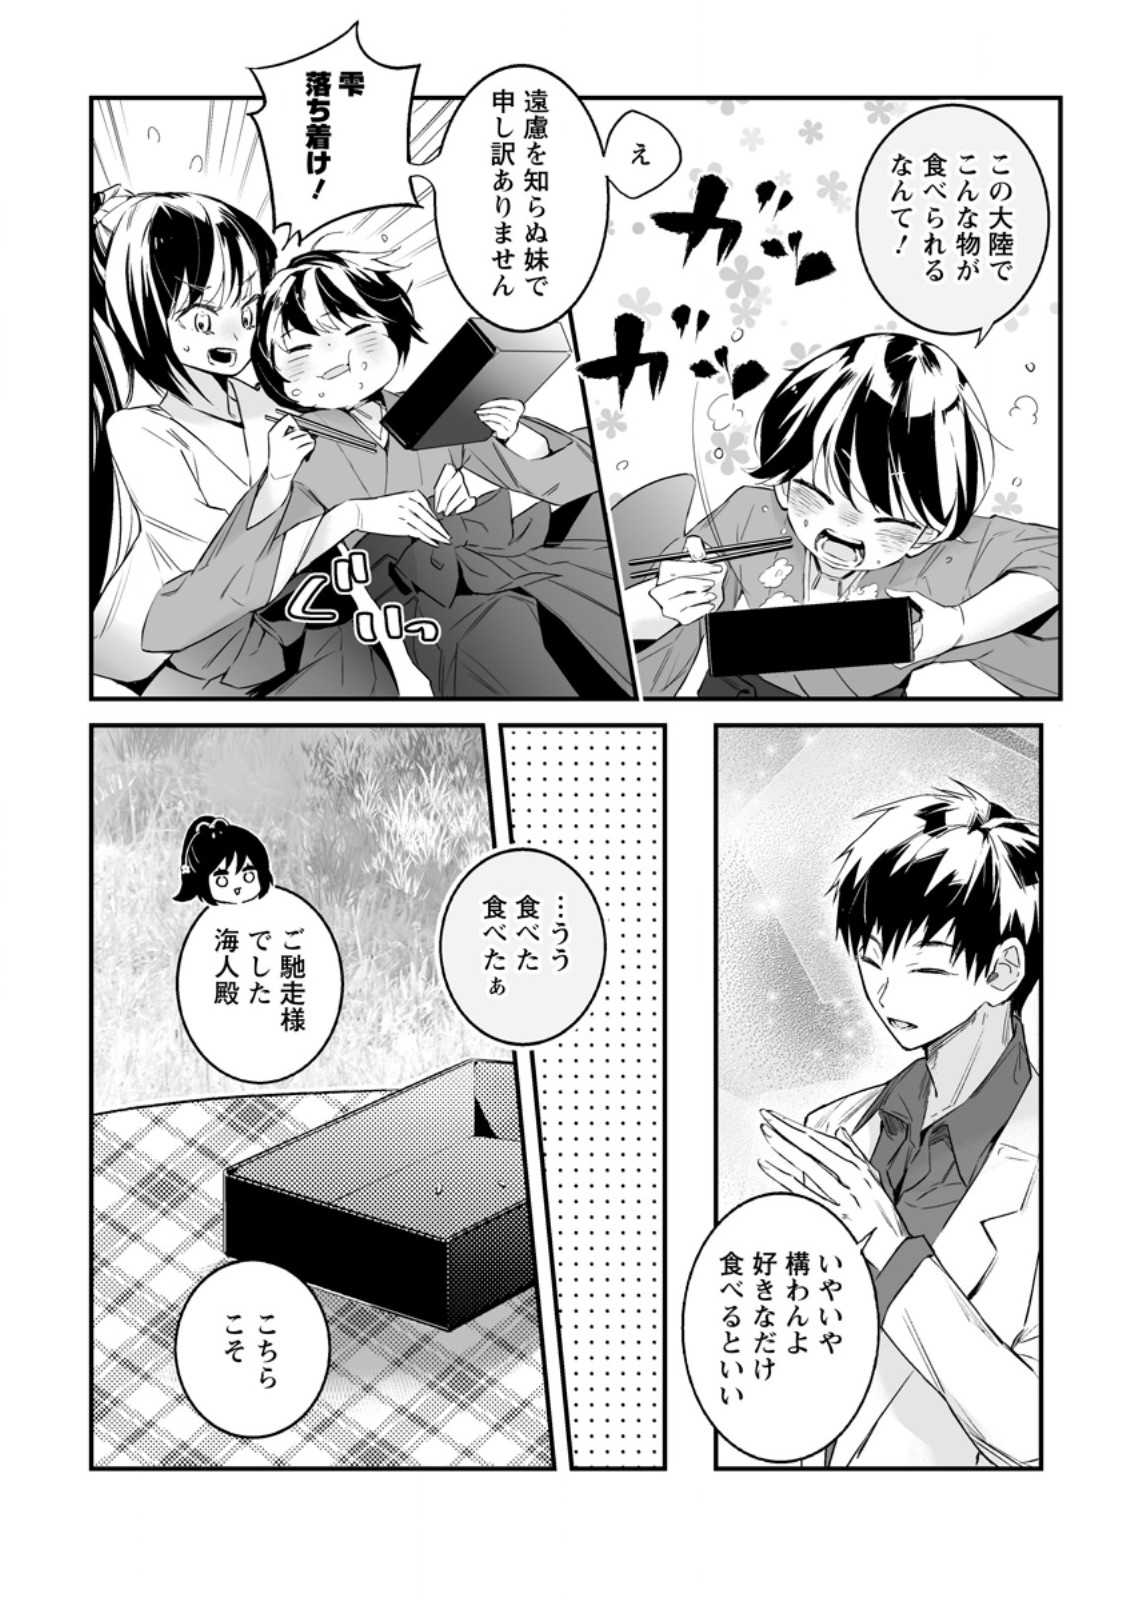 Hakui no Eiyuu - Chapter 31.1 - Page 2